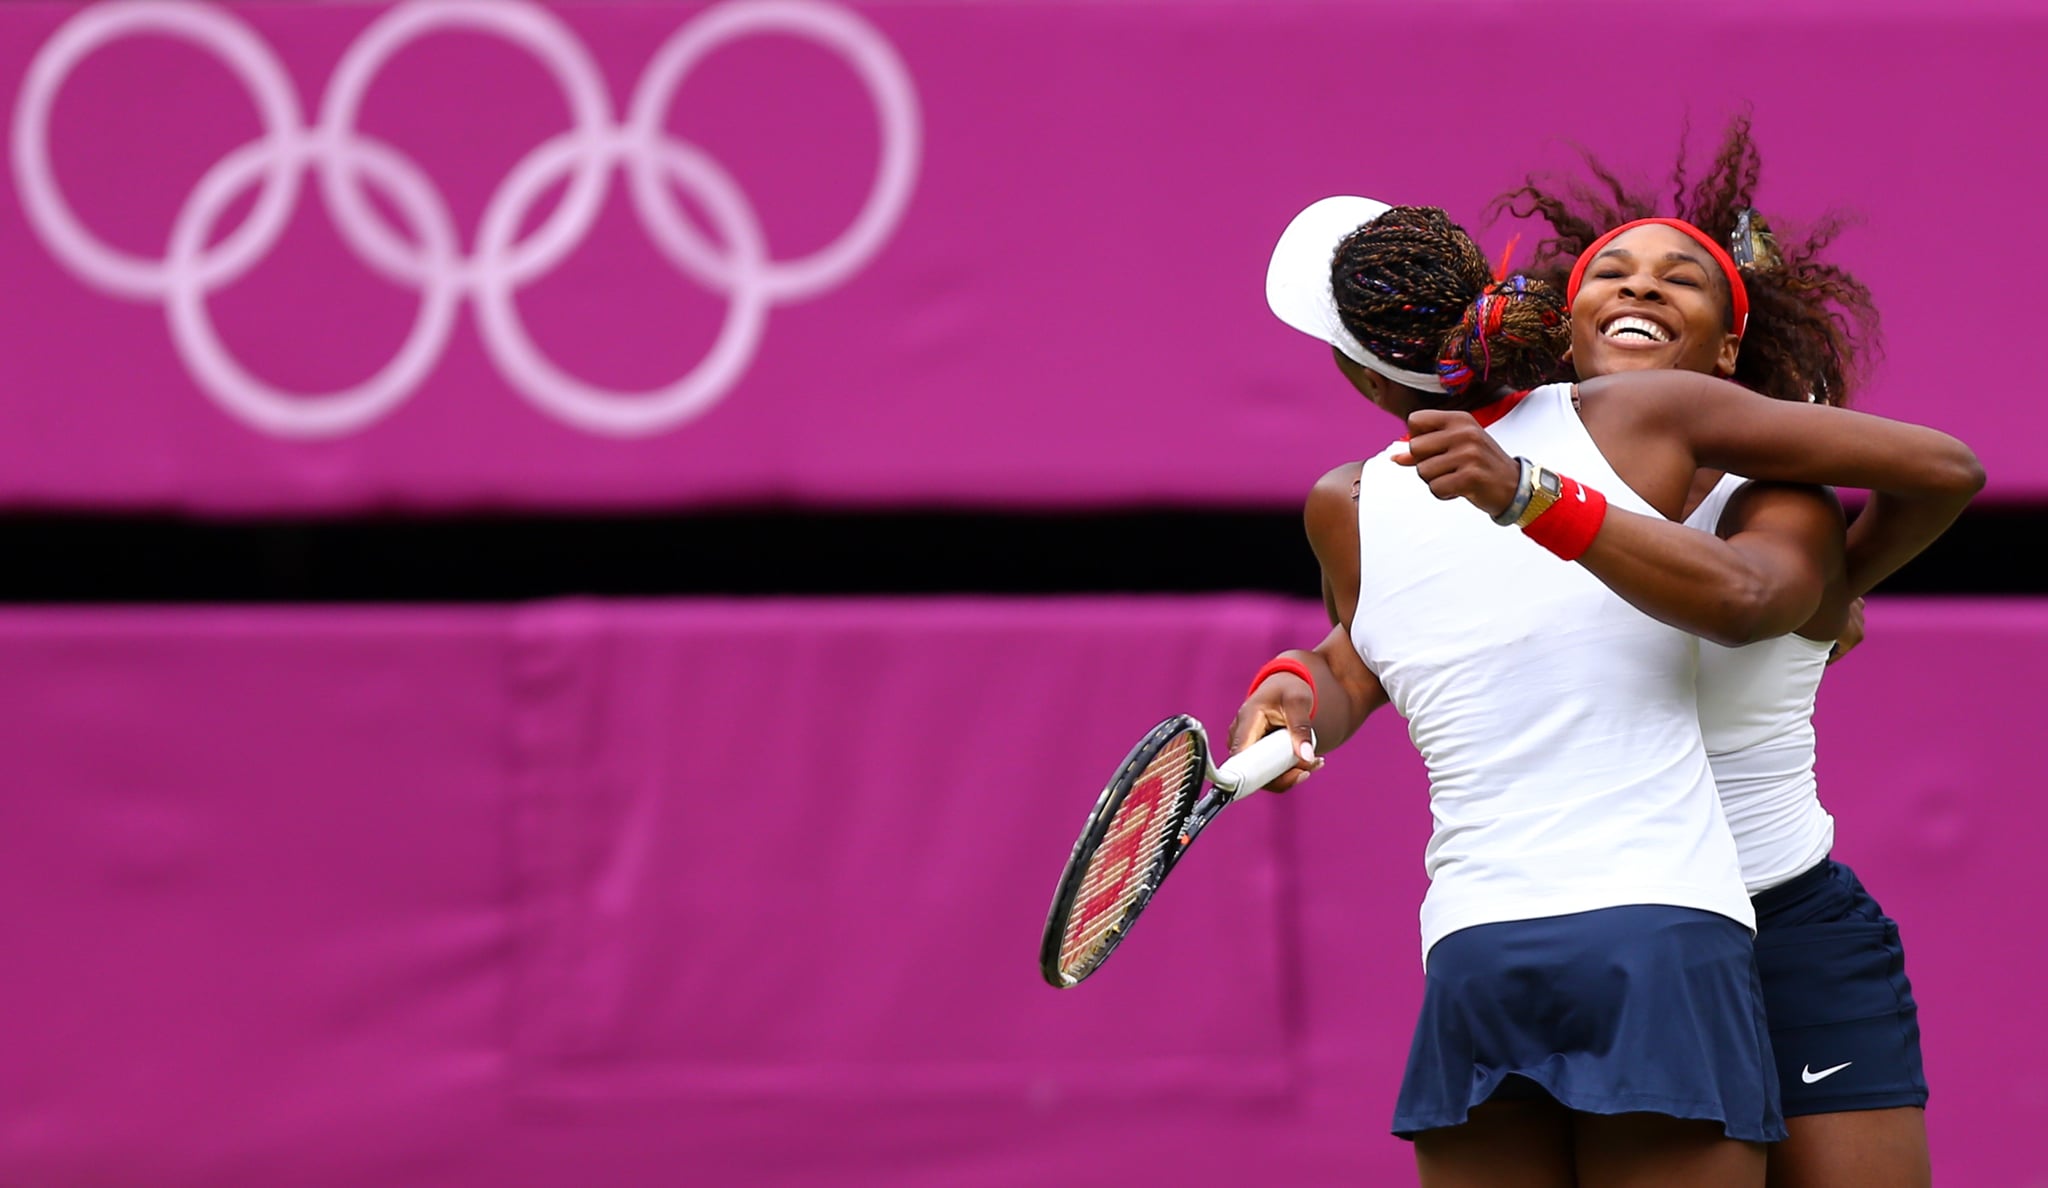 Williams sister. Лондон 2012. Индия на летних Олимпийских играх 2012. Serena Williams Ballet Olympia photos. Теннис Девчачий фото на аву.